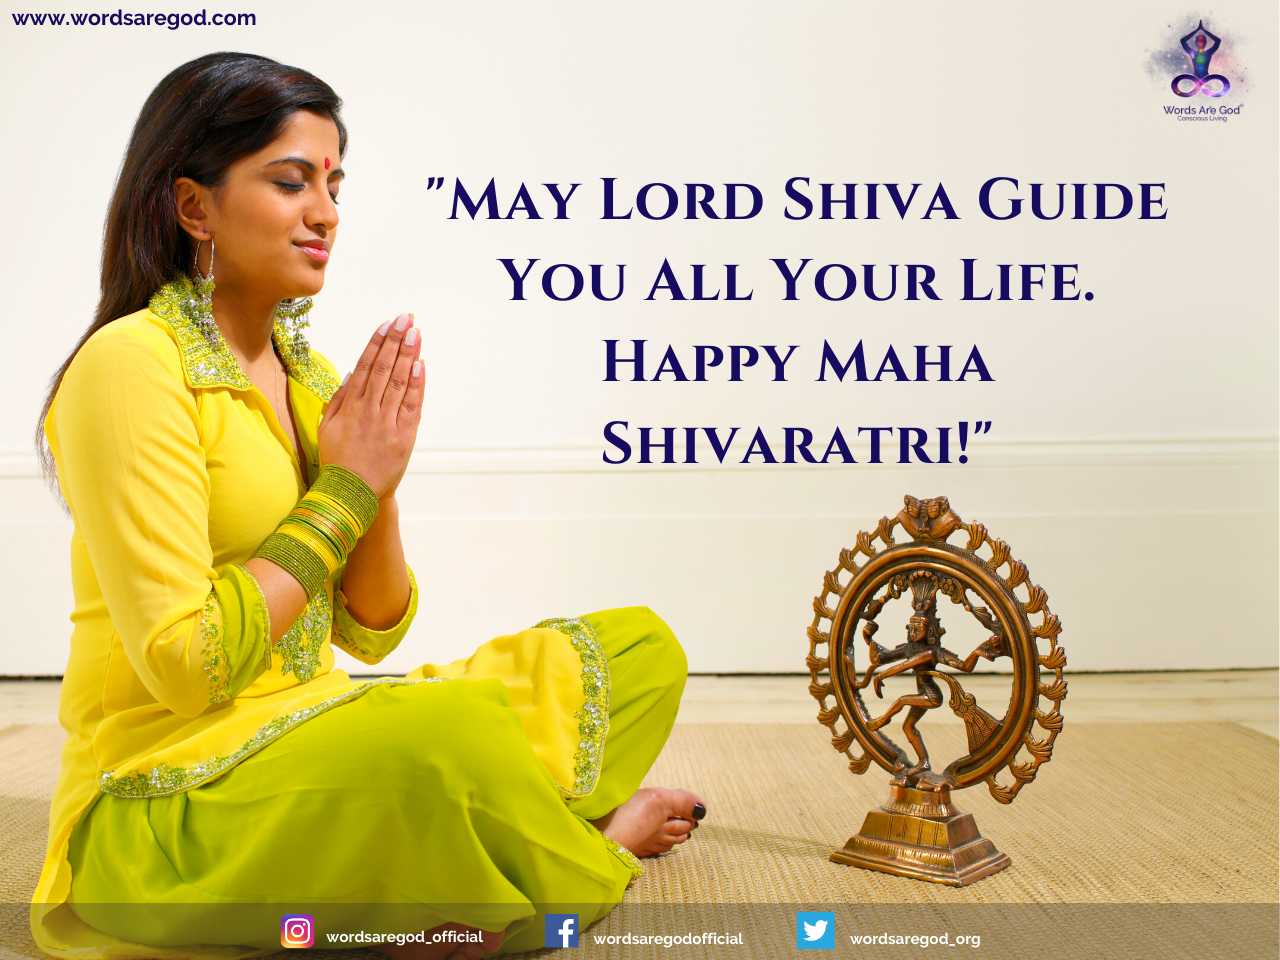 Happy shivratri